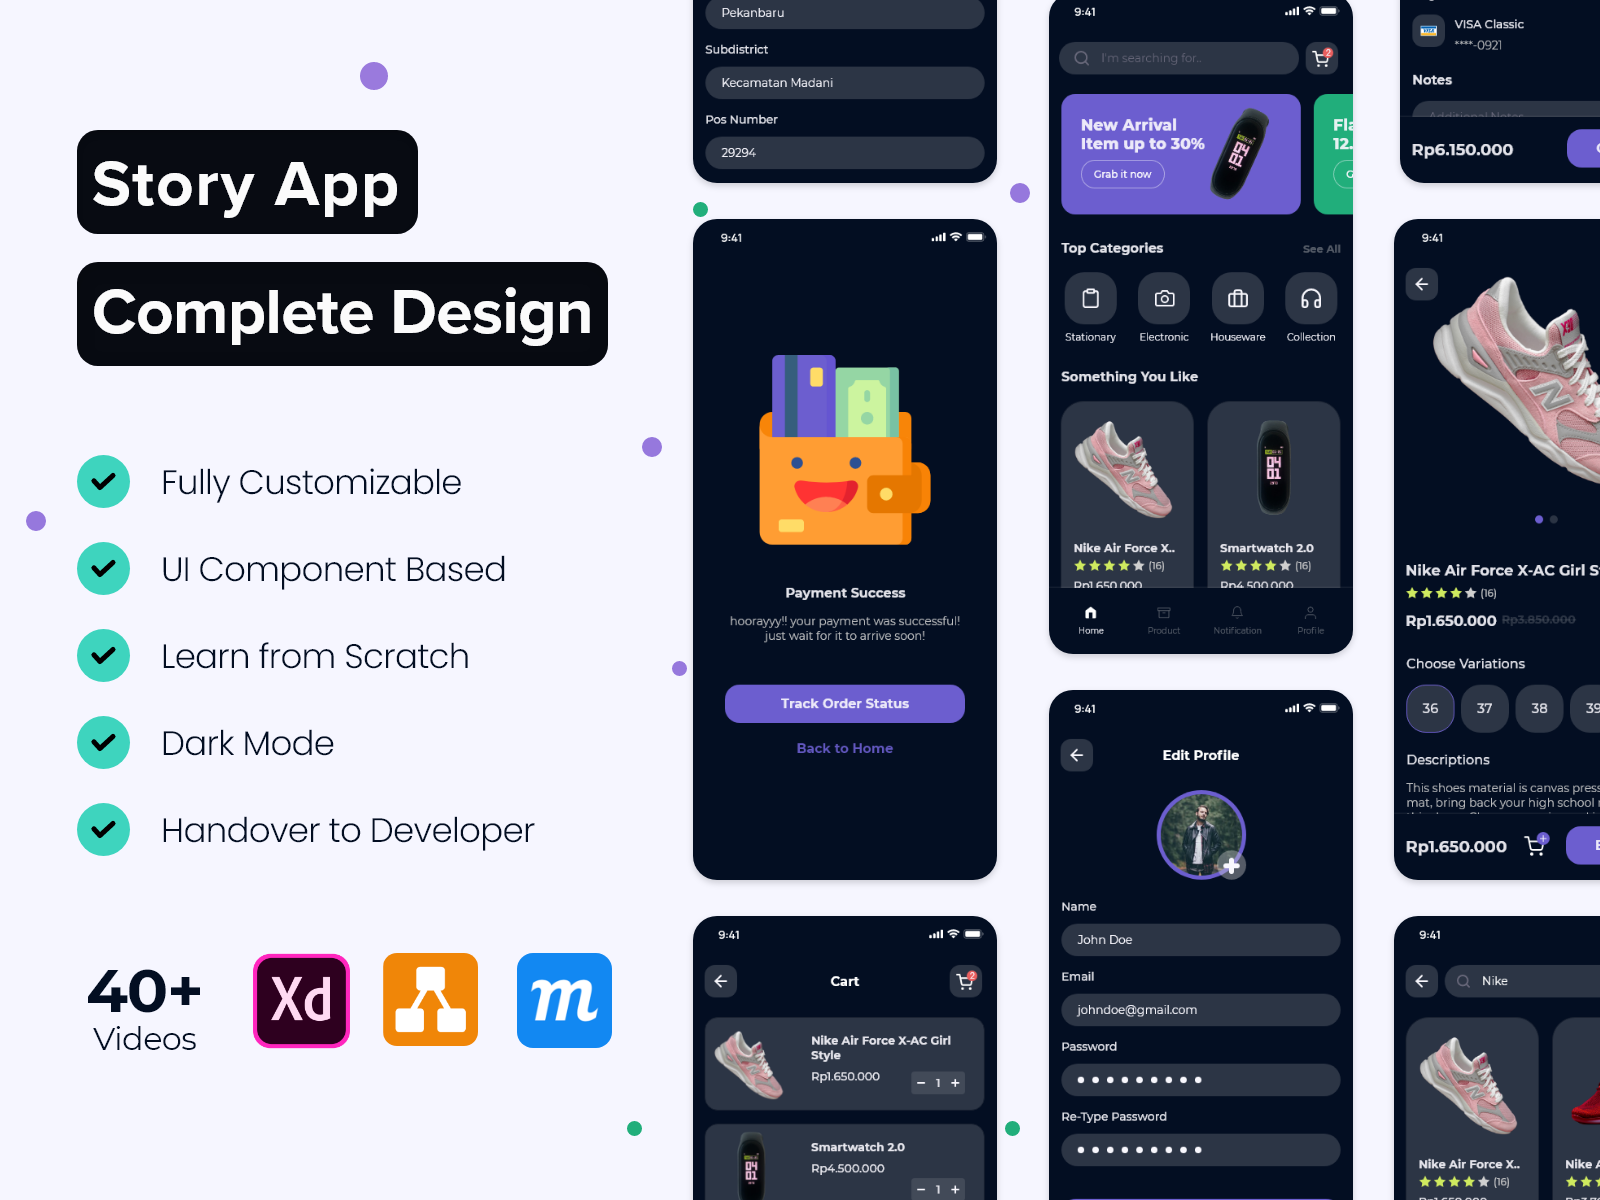 Kelas Adobe XD Mega Course: Design E-Commerce App di BuildWith Angga